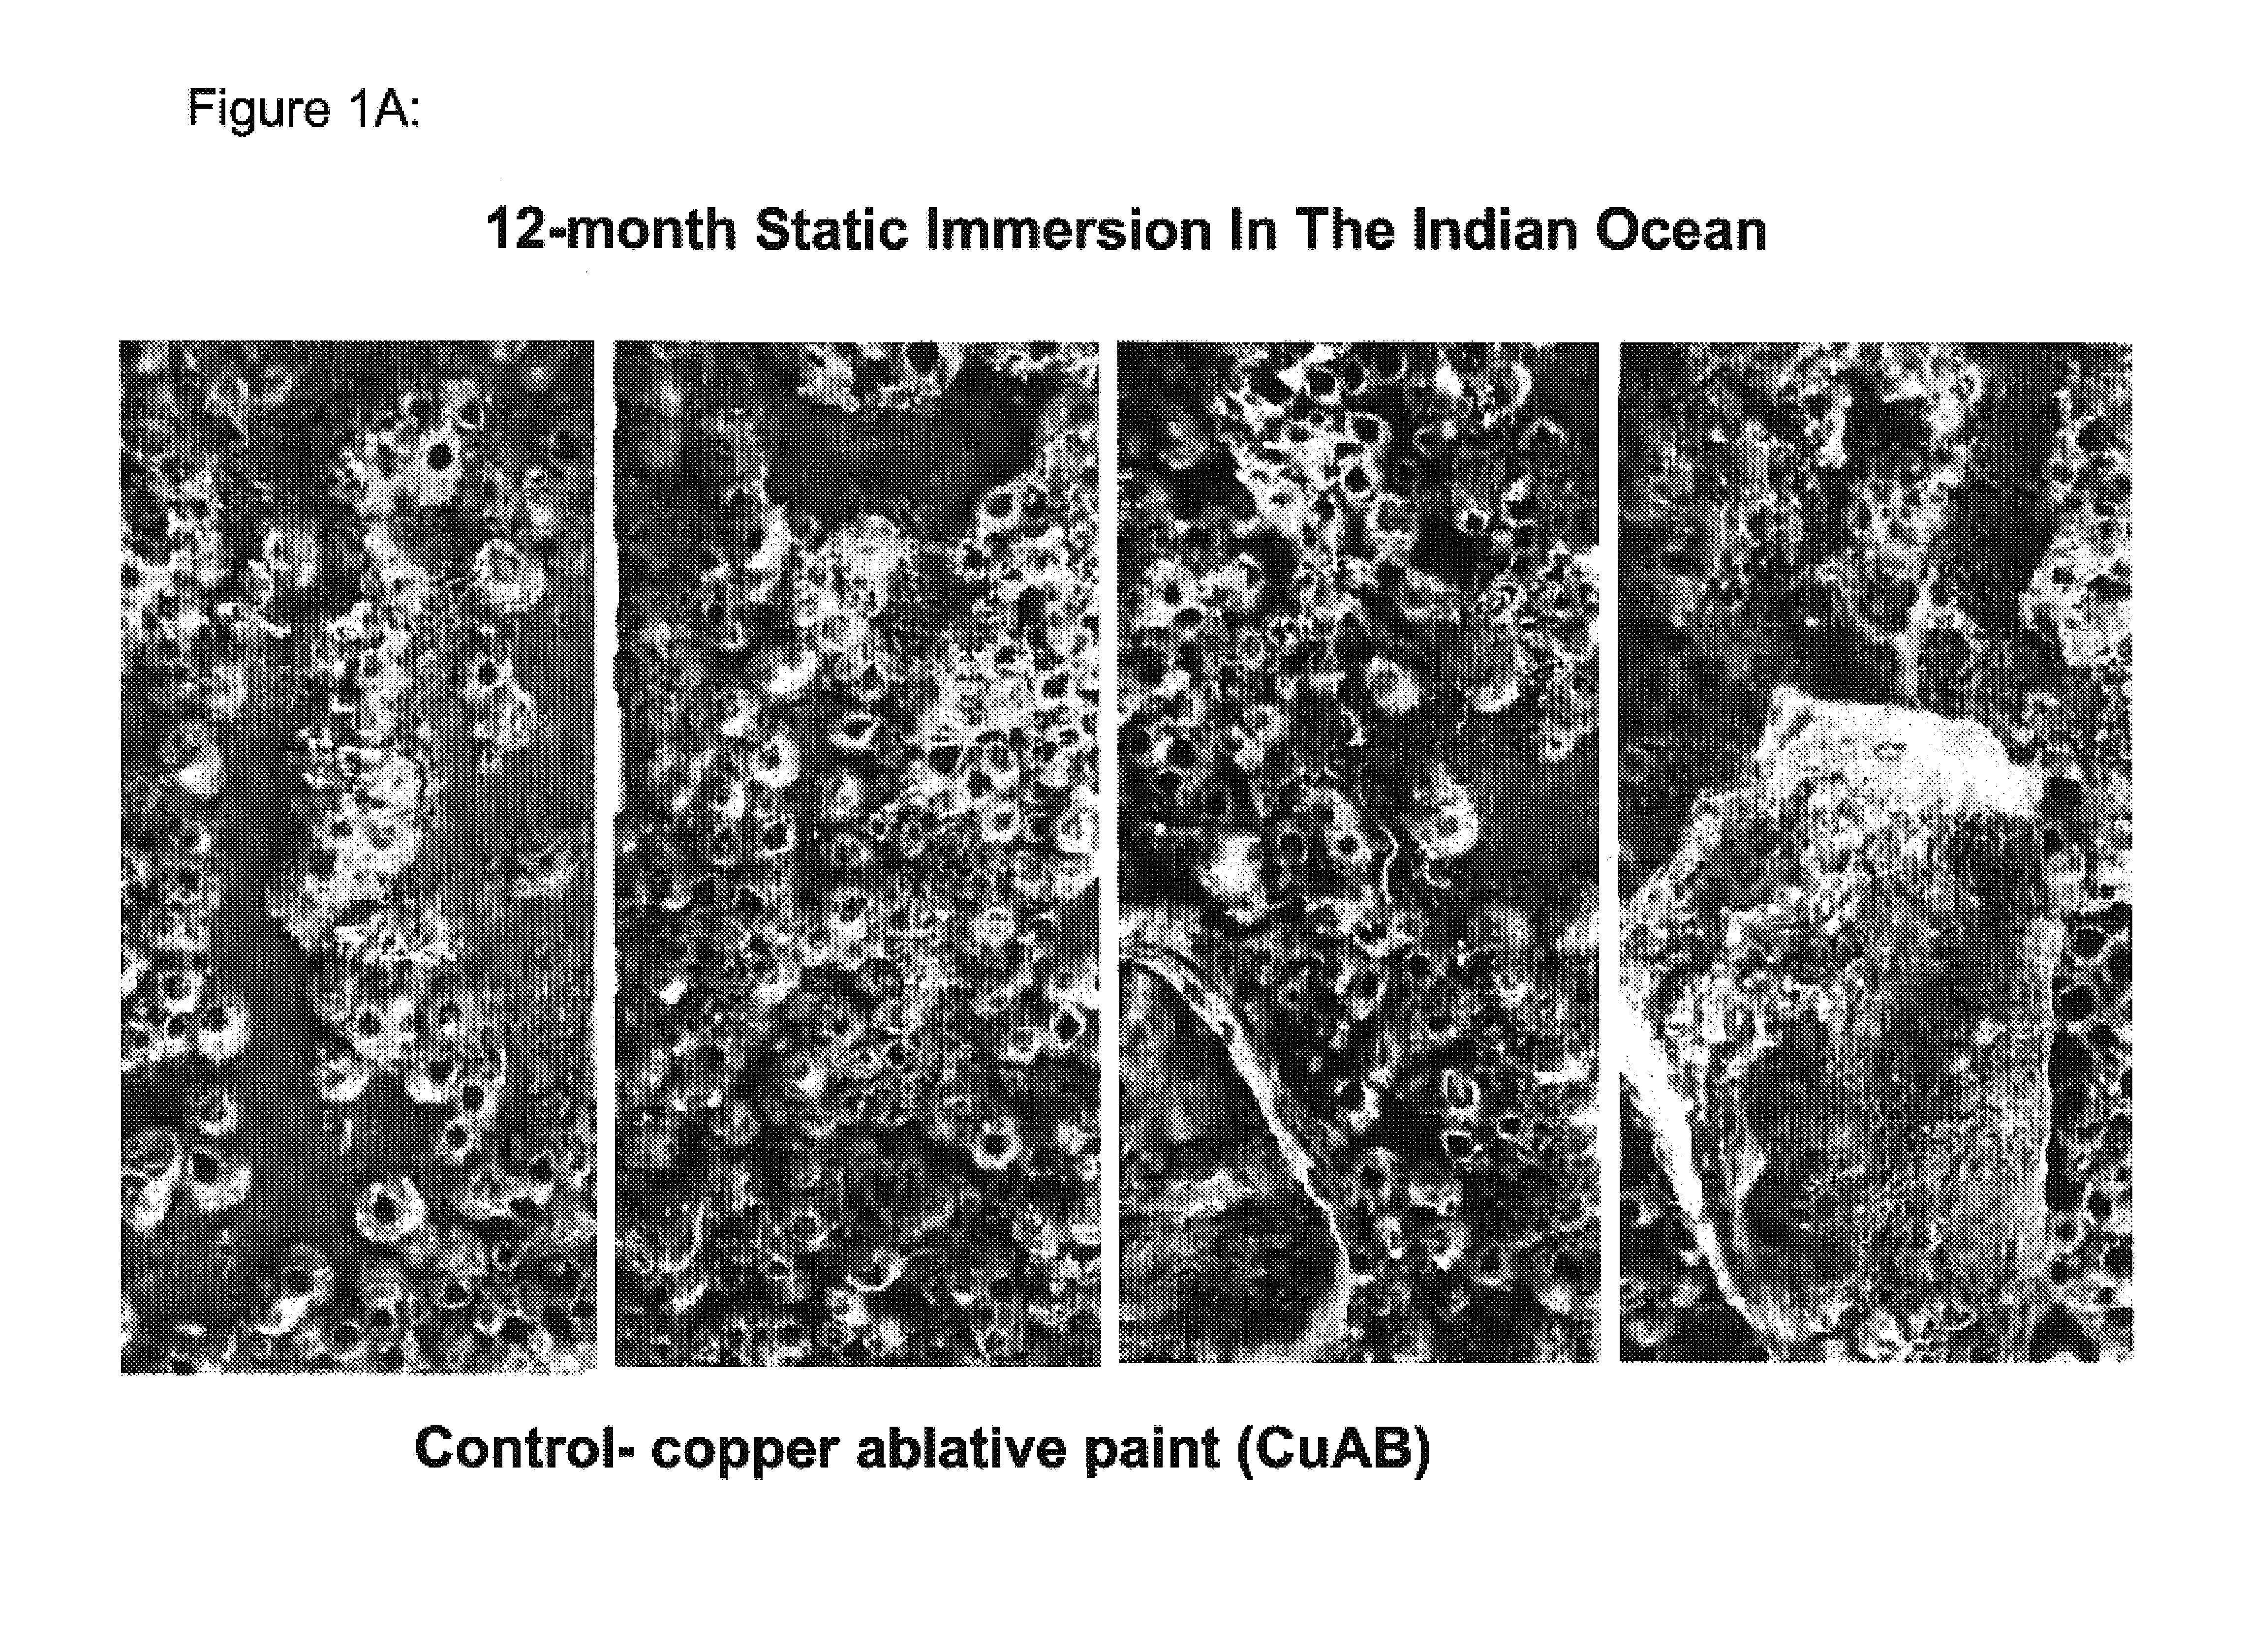 Marine antifouling coating compositions